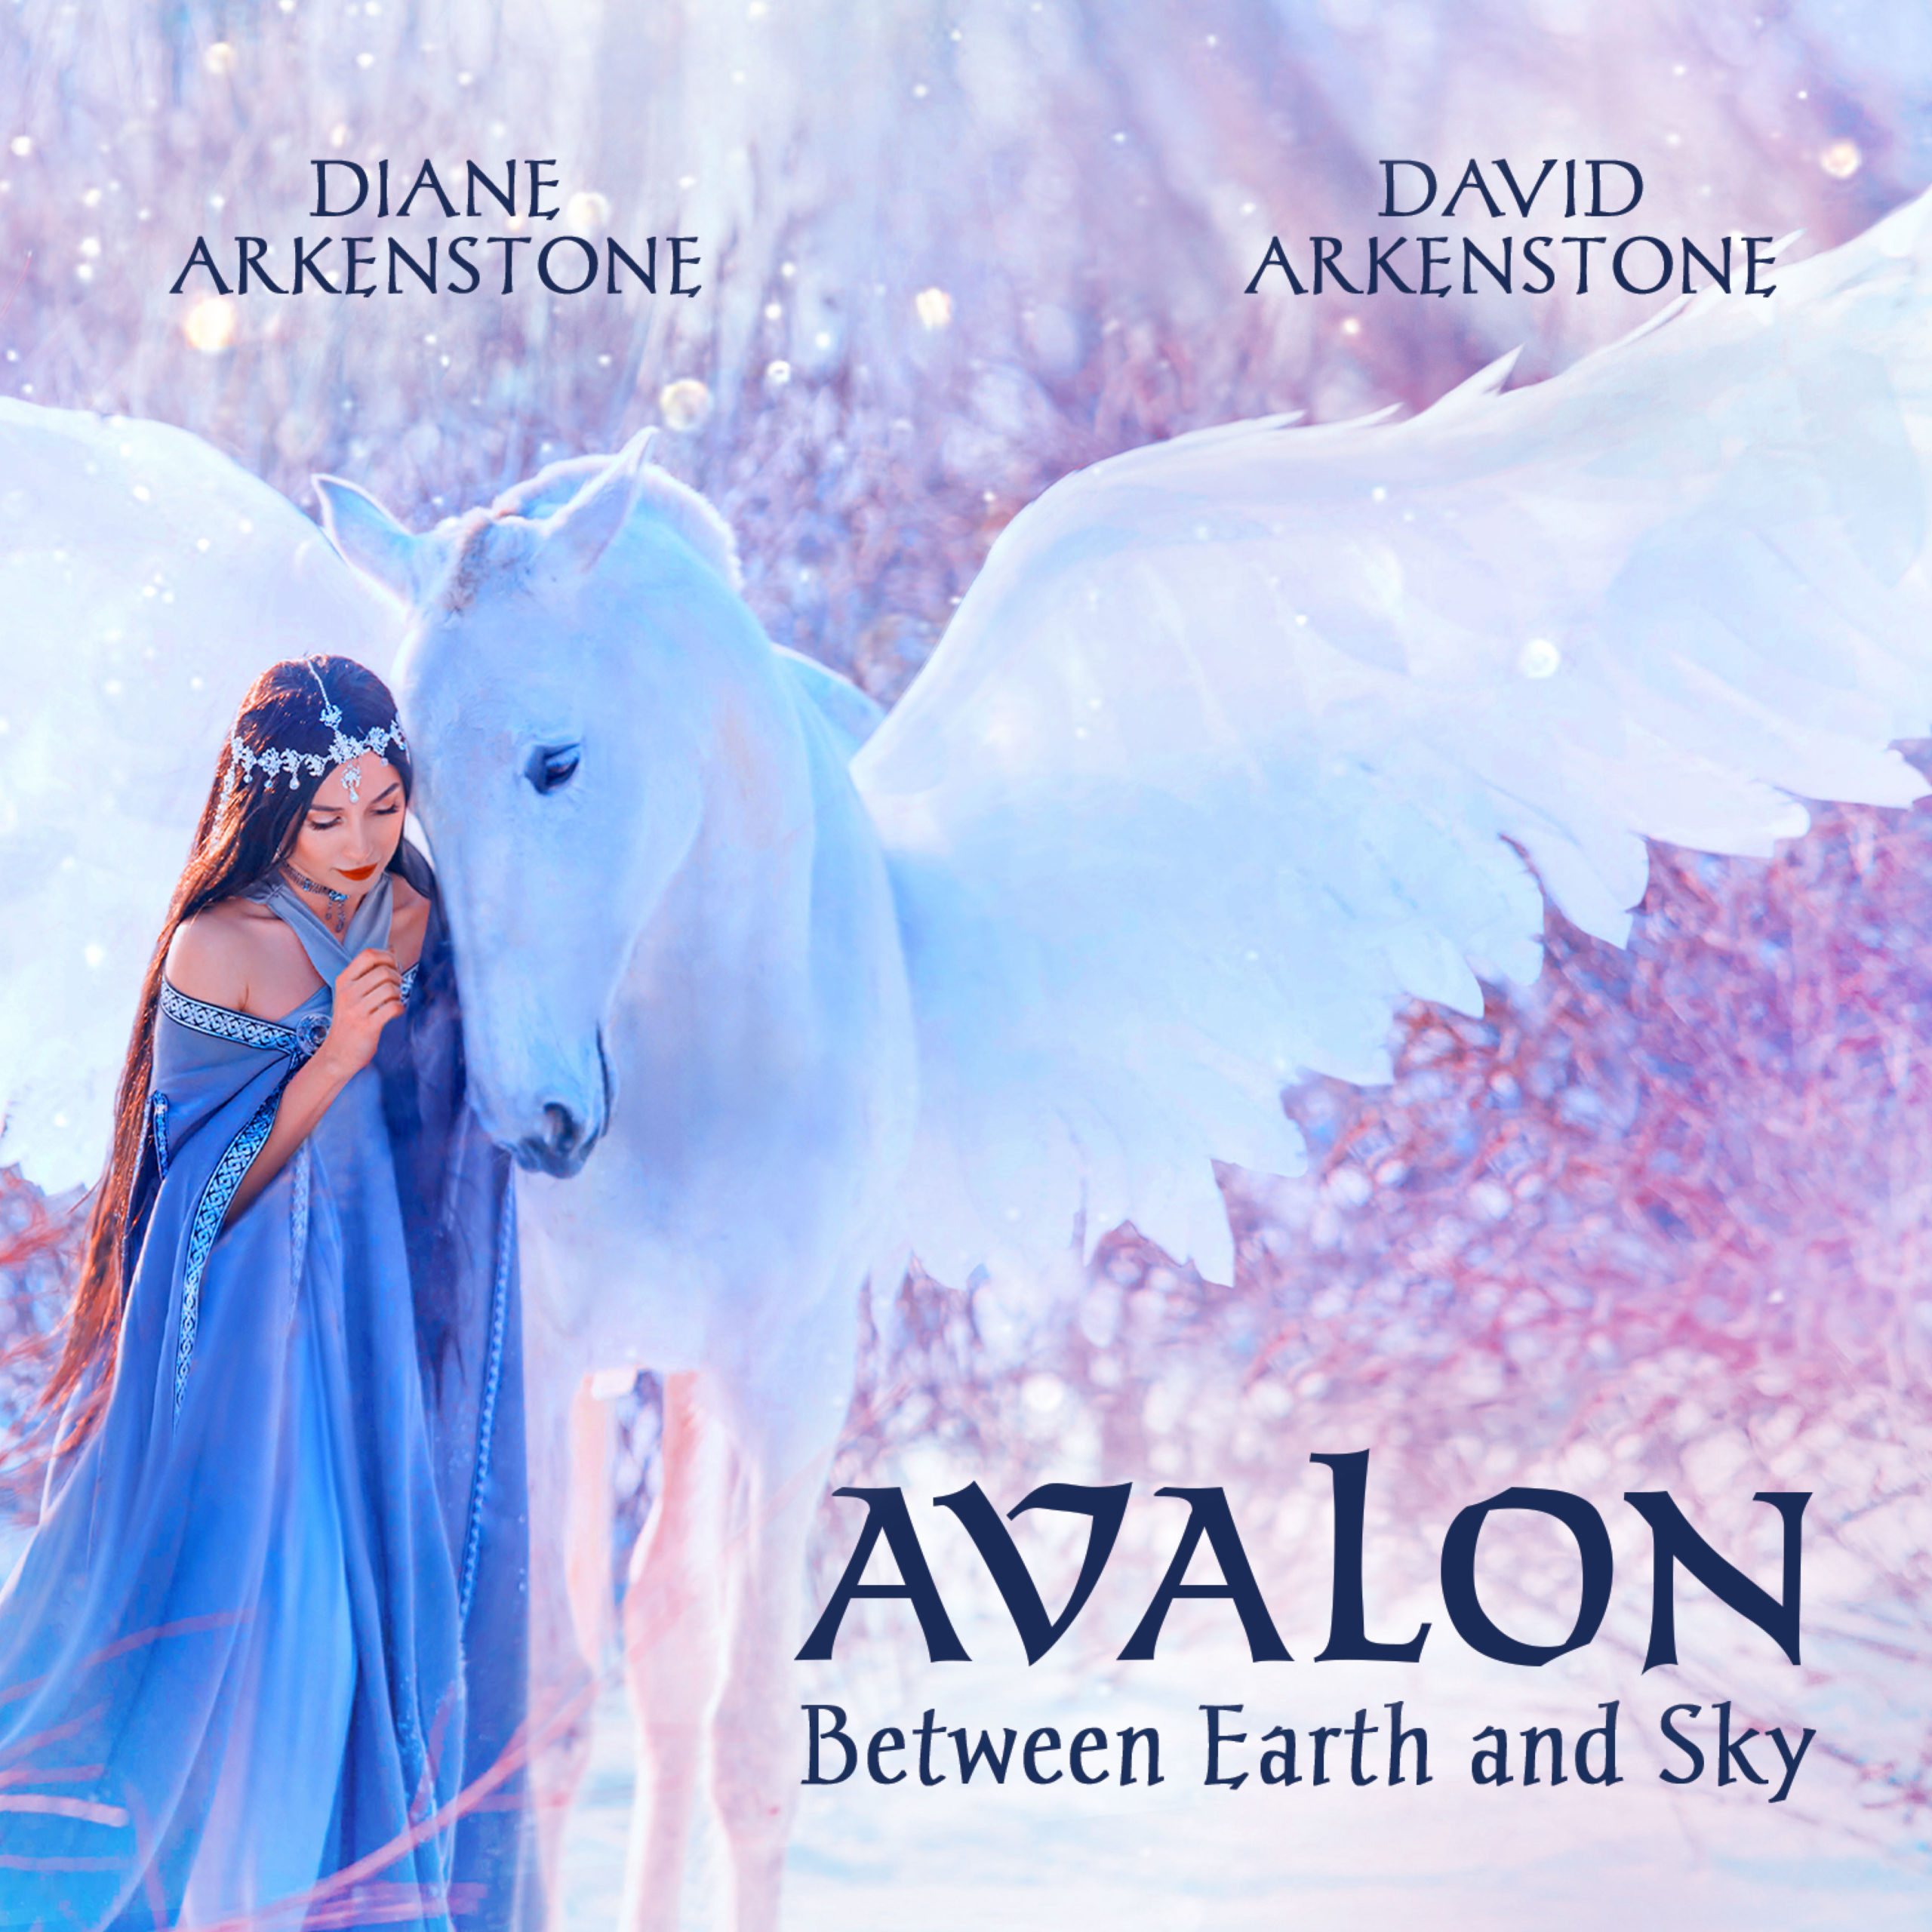 The Avalon Videos